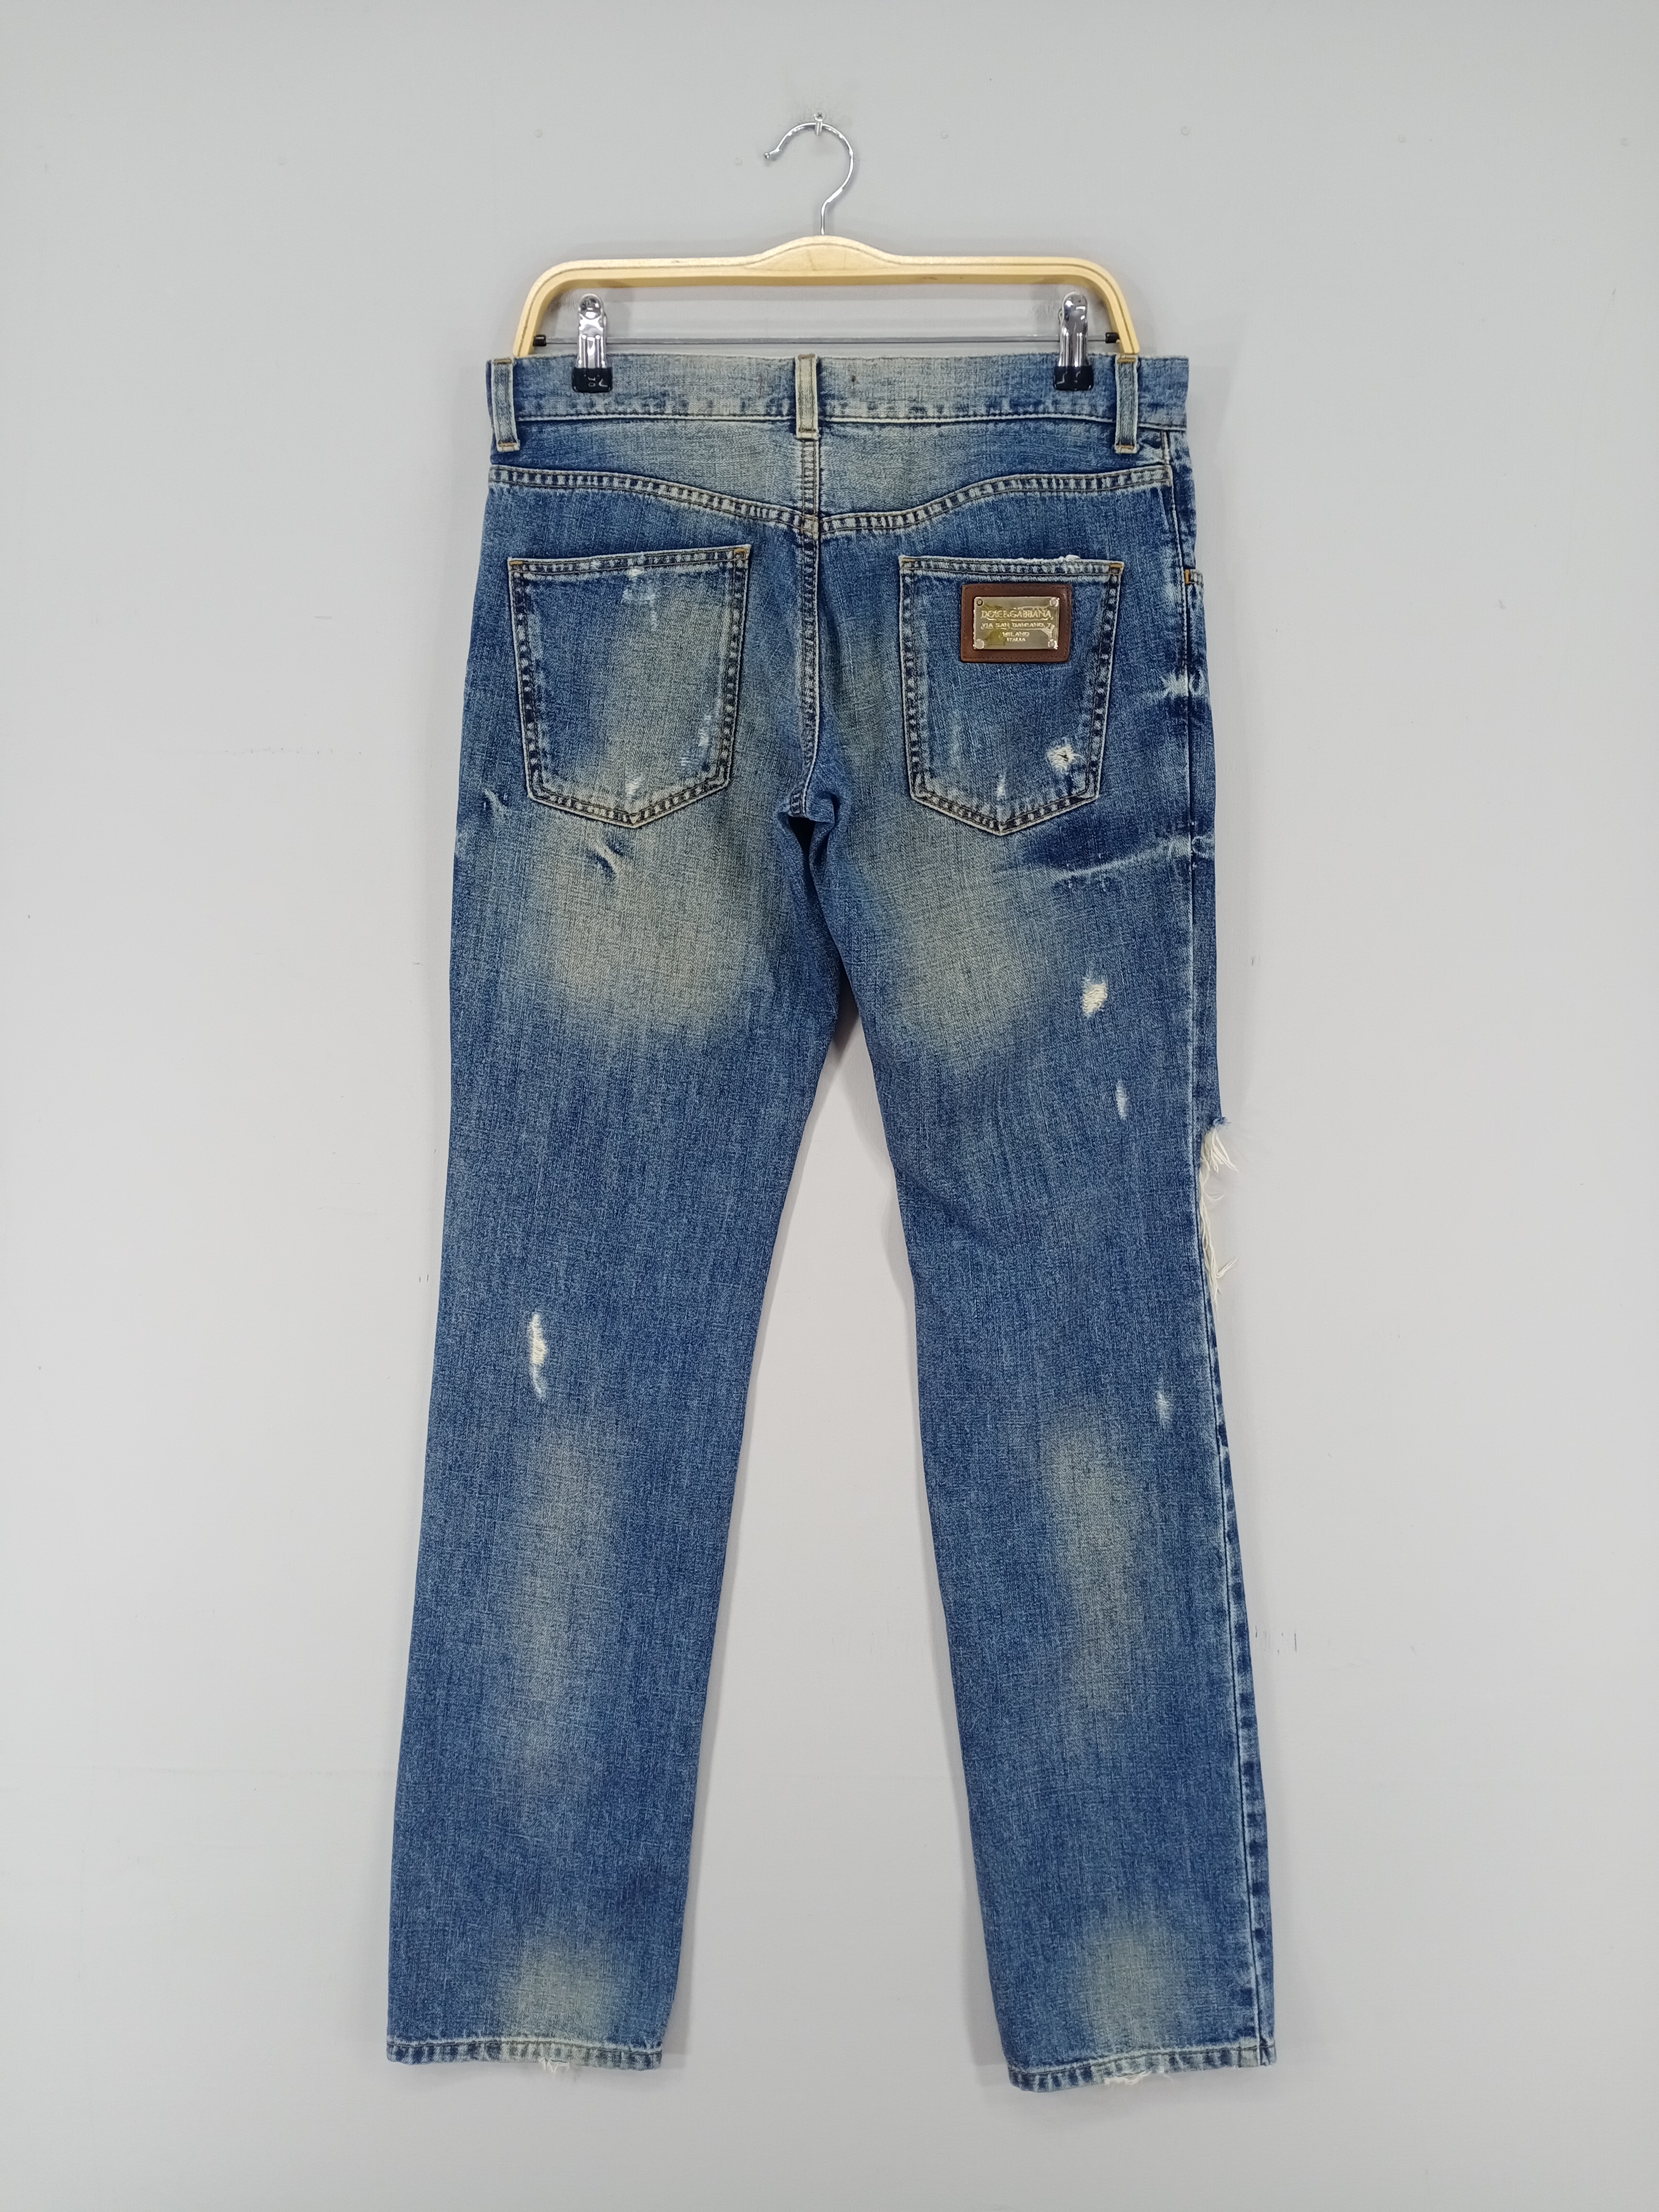 💥RARE💥Dolce Gabbana Medium Wash Distressed Jeans - 9